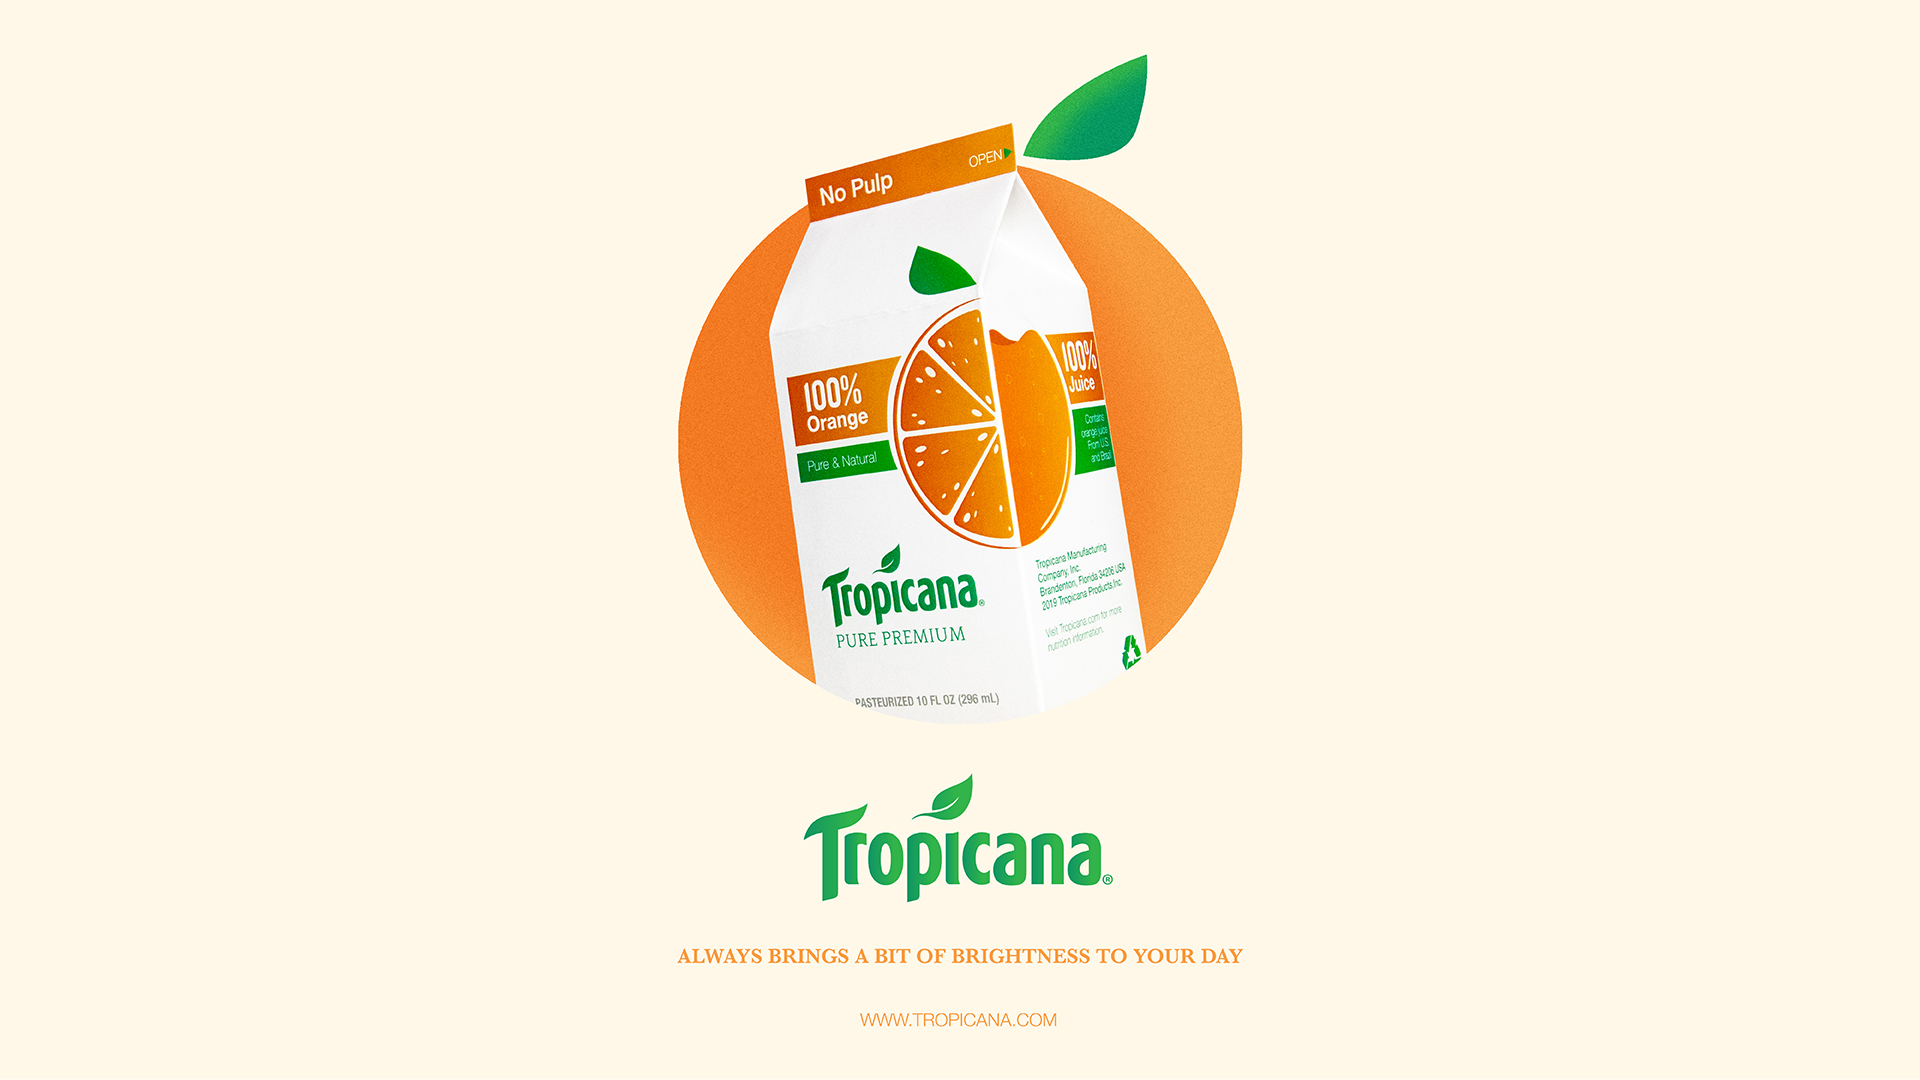 Tropicana: Always Brings a Bit of Brightness to Your Day / "Tropicana: Always Brings a Bit of Brightness to Your Day," Social media advertisement, 2022. Social media ad for the new Tropicana package design.